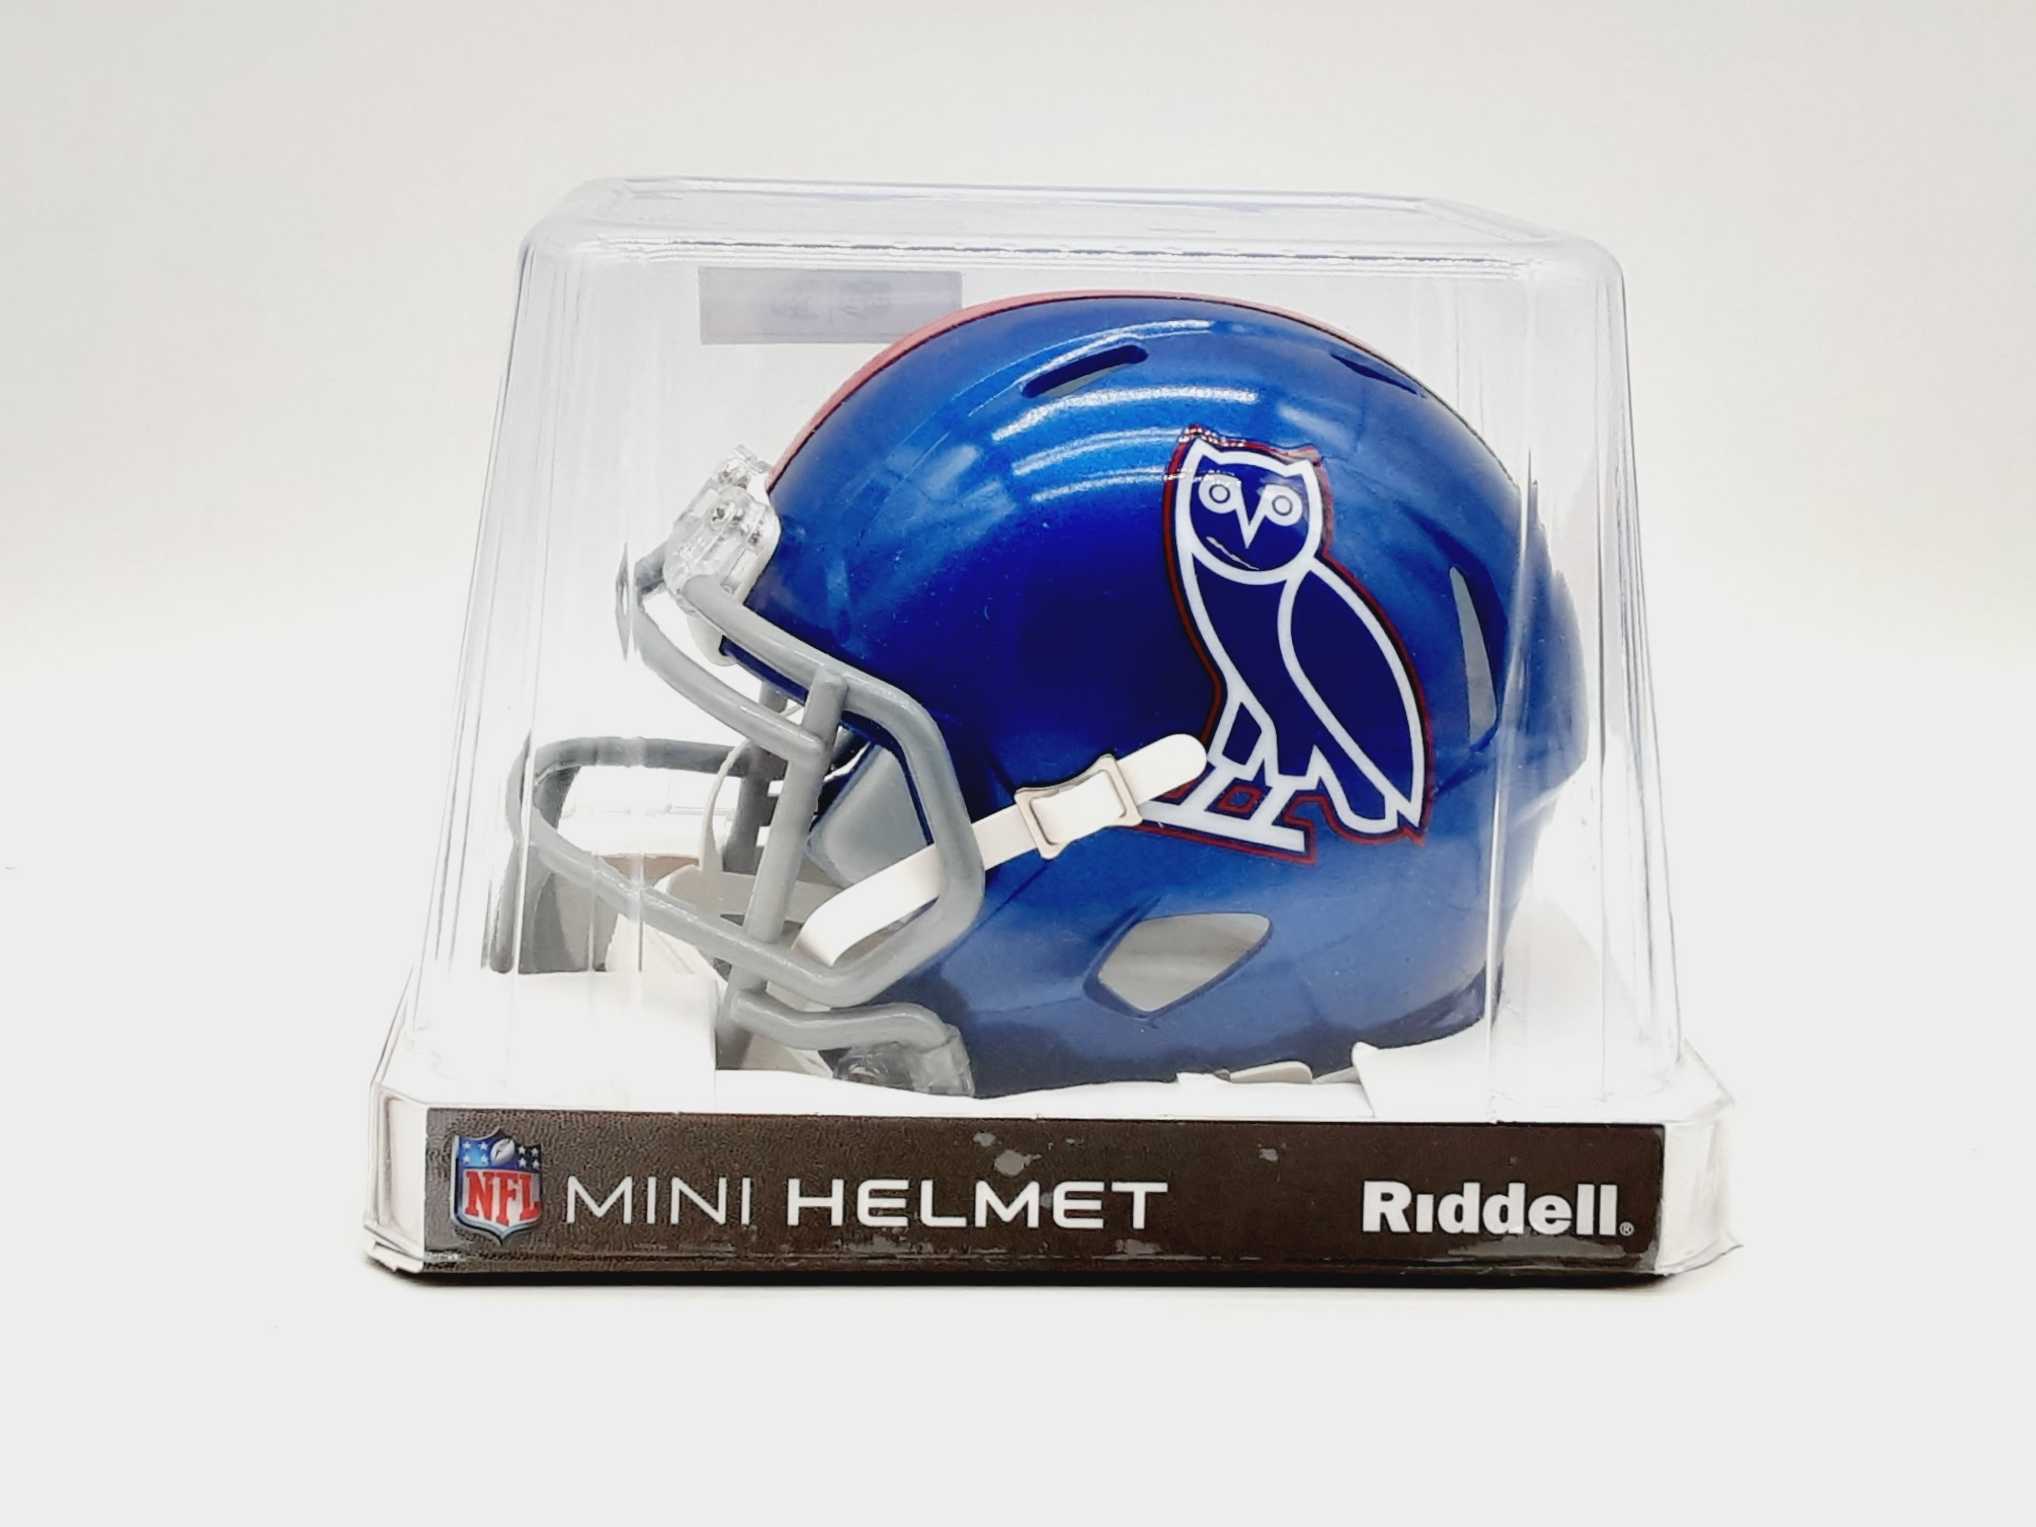 Nfl X Ovo New York Giants Mini Helmet Collectible Dolozde 144020002390